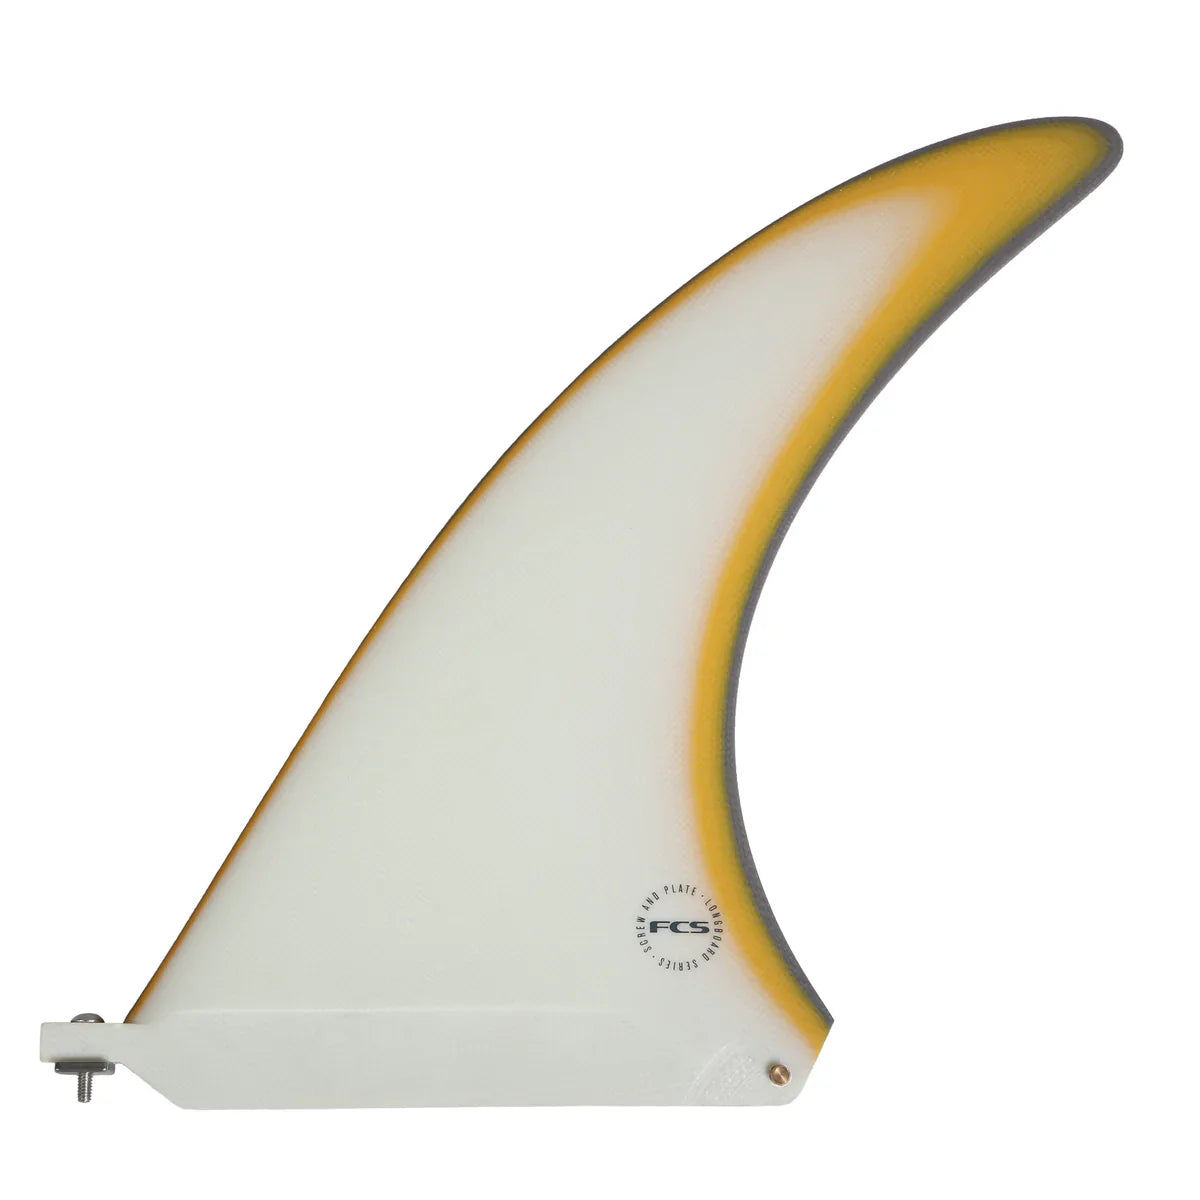 fcs-flow-fin-screw-and-plate-mango-clear-white-surfboard-longboard-fin-PG-performance-glass-galway-ireland-blacksheepsurfco-8.5-inch